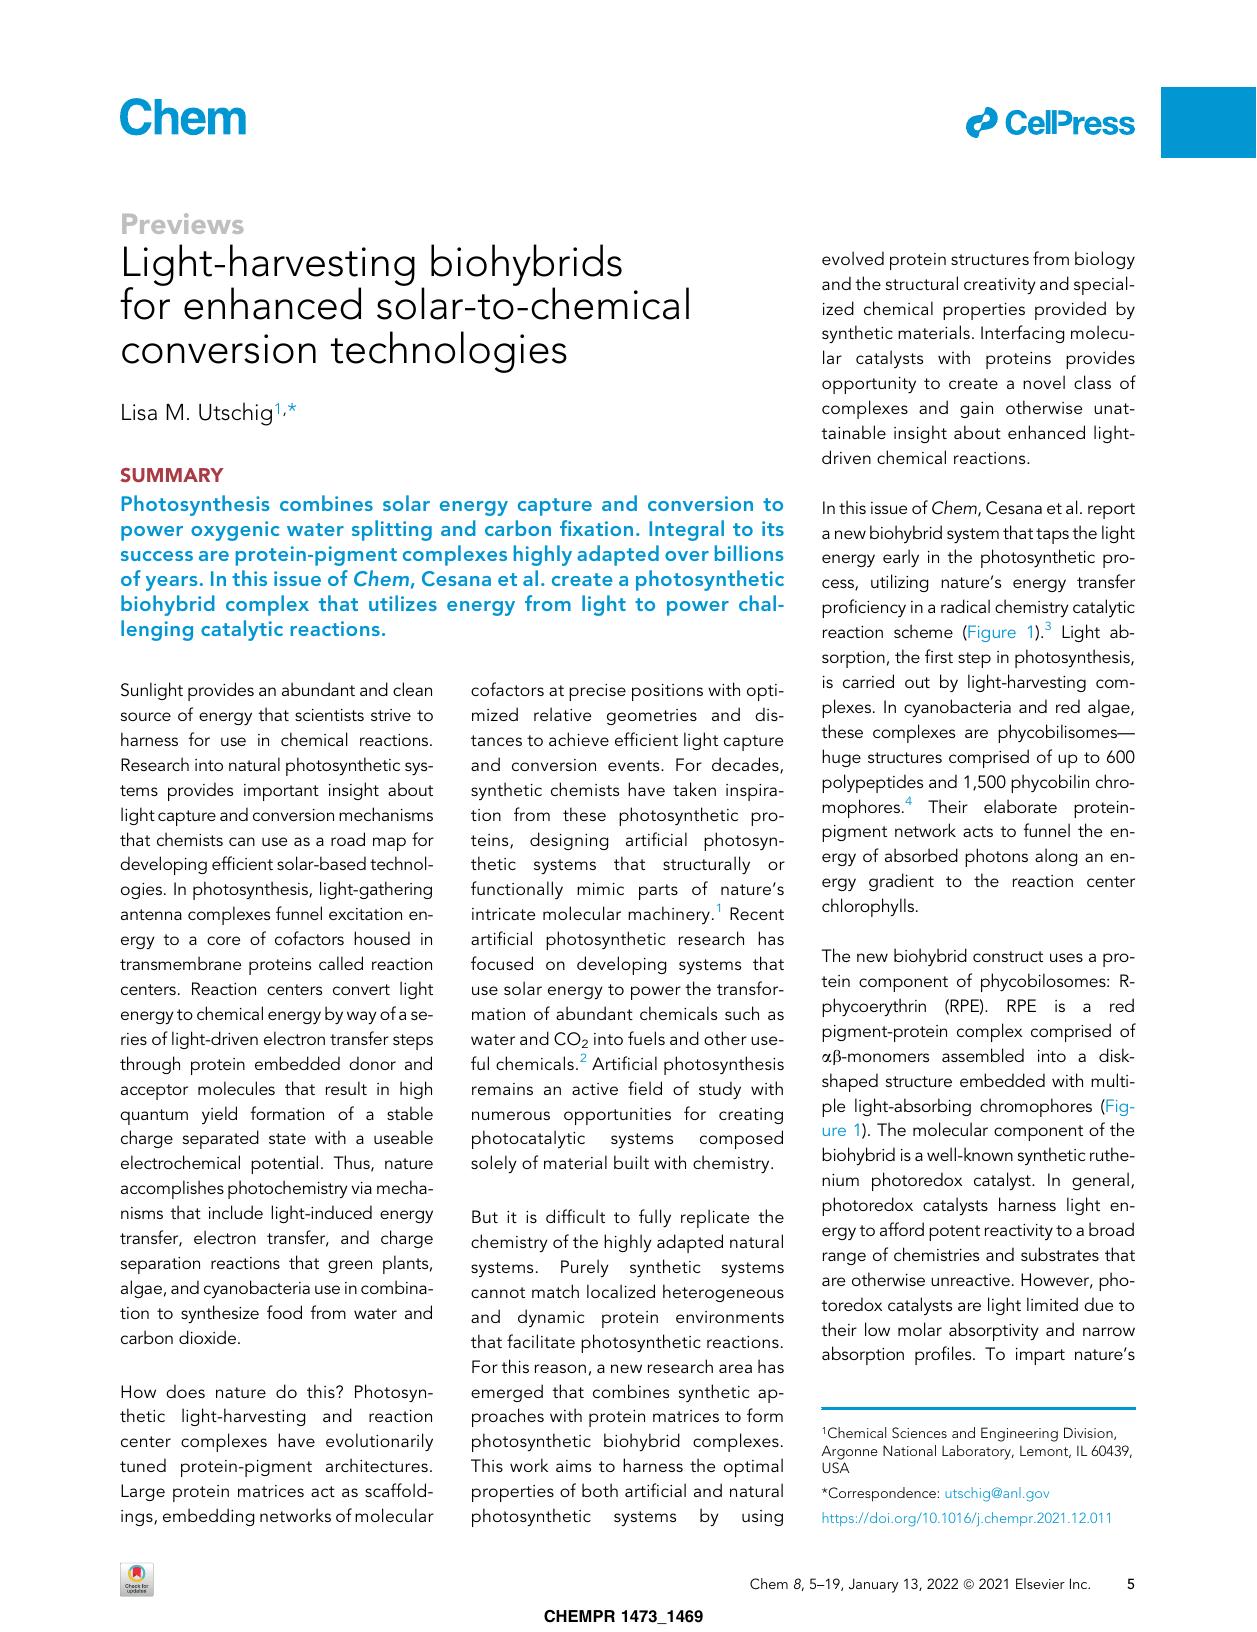 Light-harvesting biohybrids for enhanced solar-to-chemical conversion technologies by Lisa M. Utschig